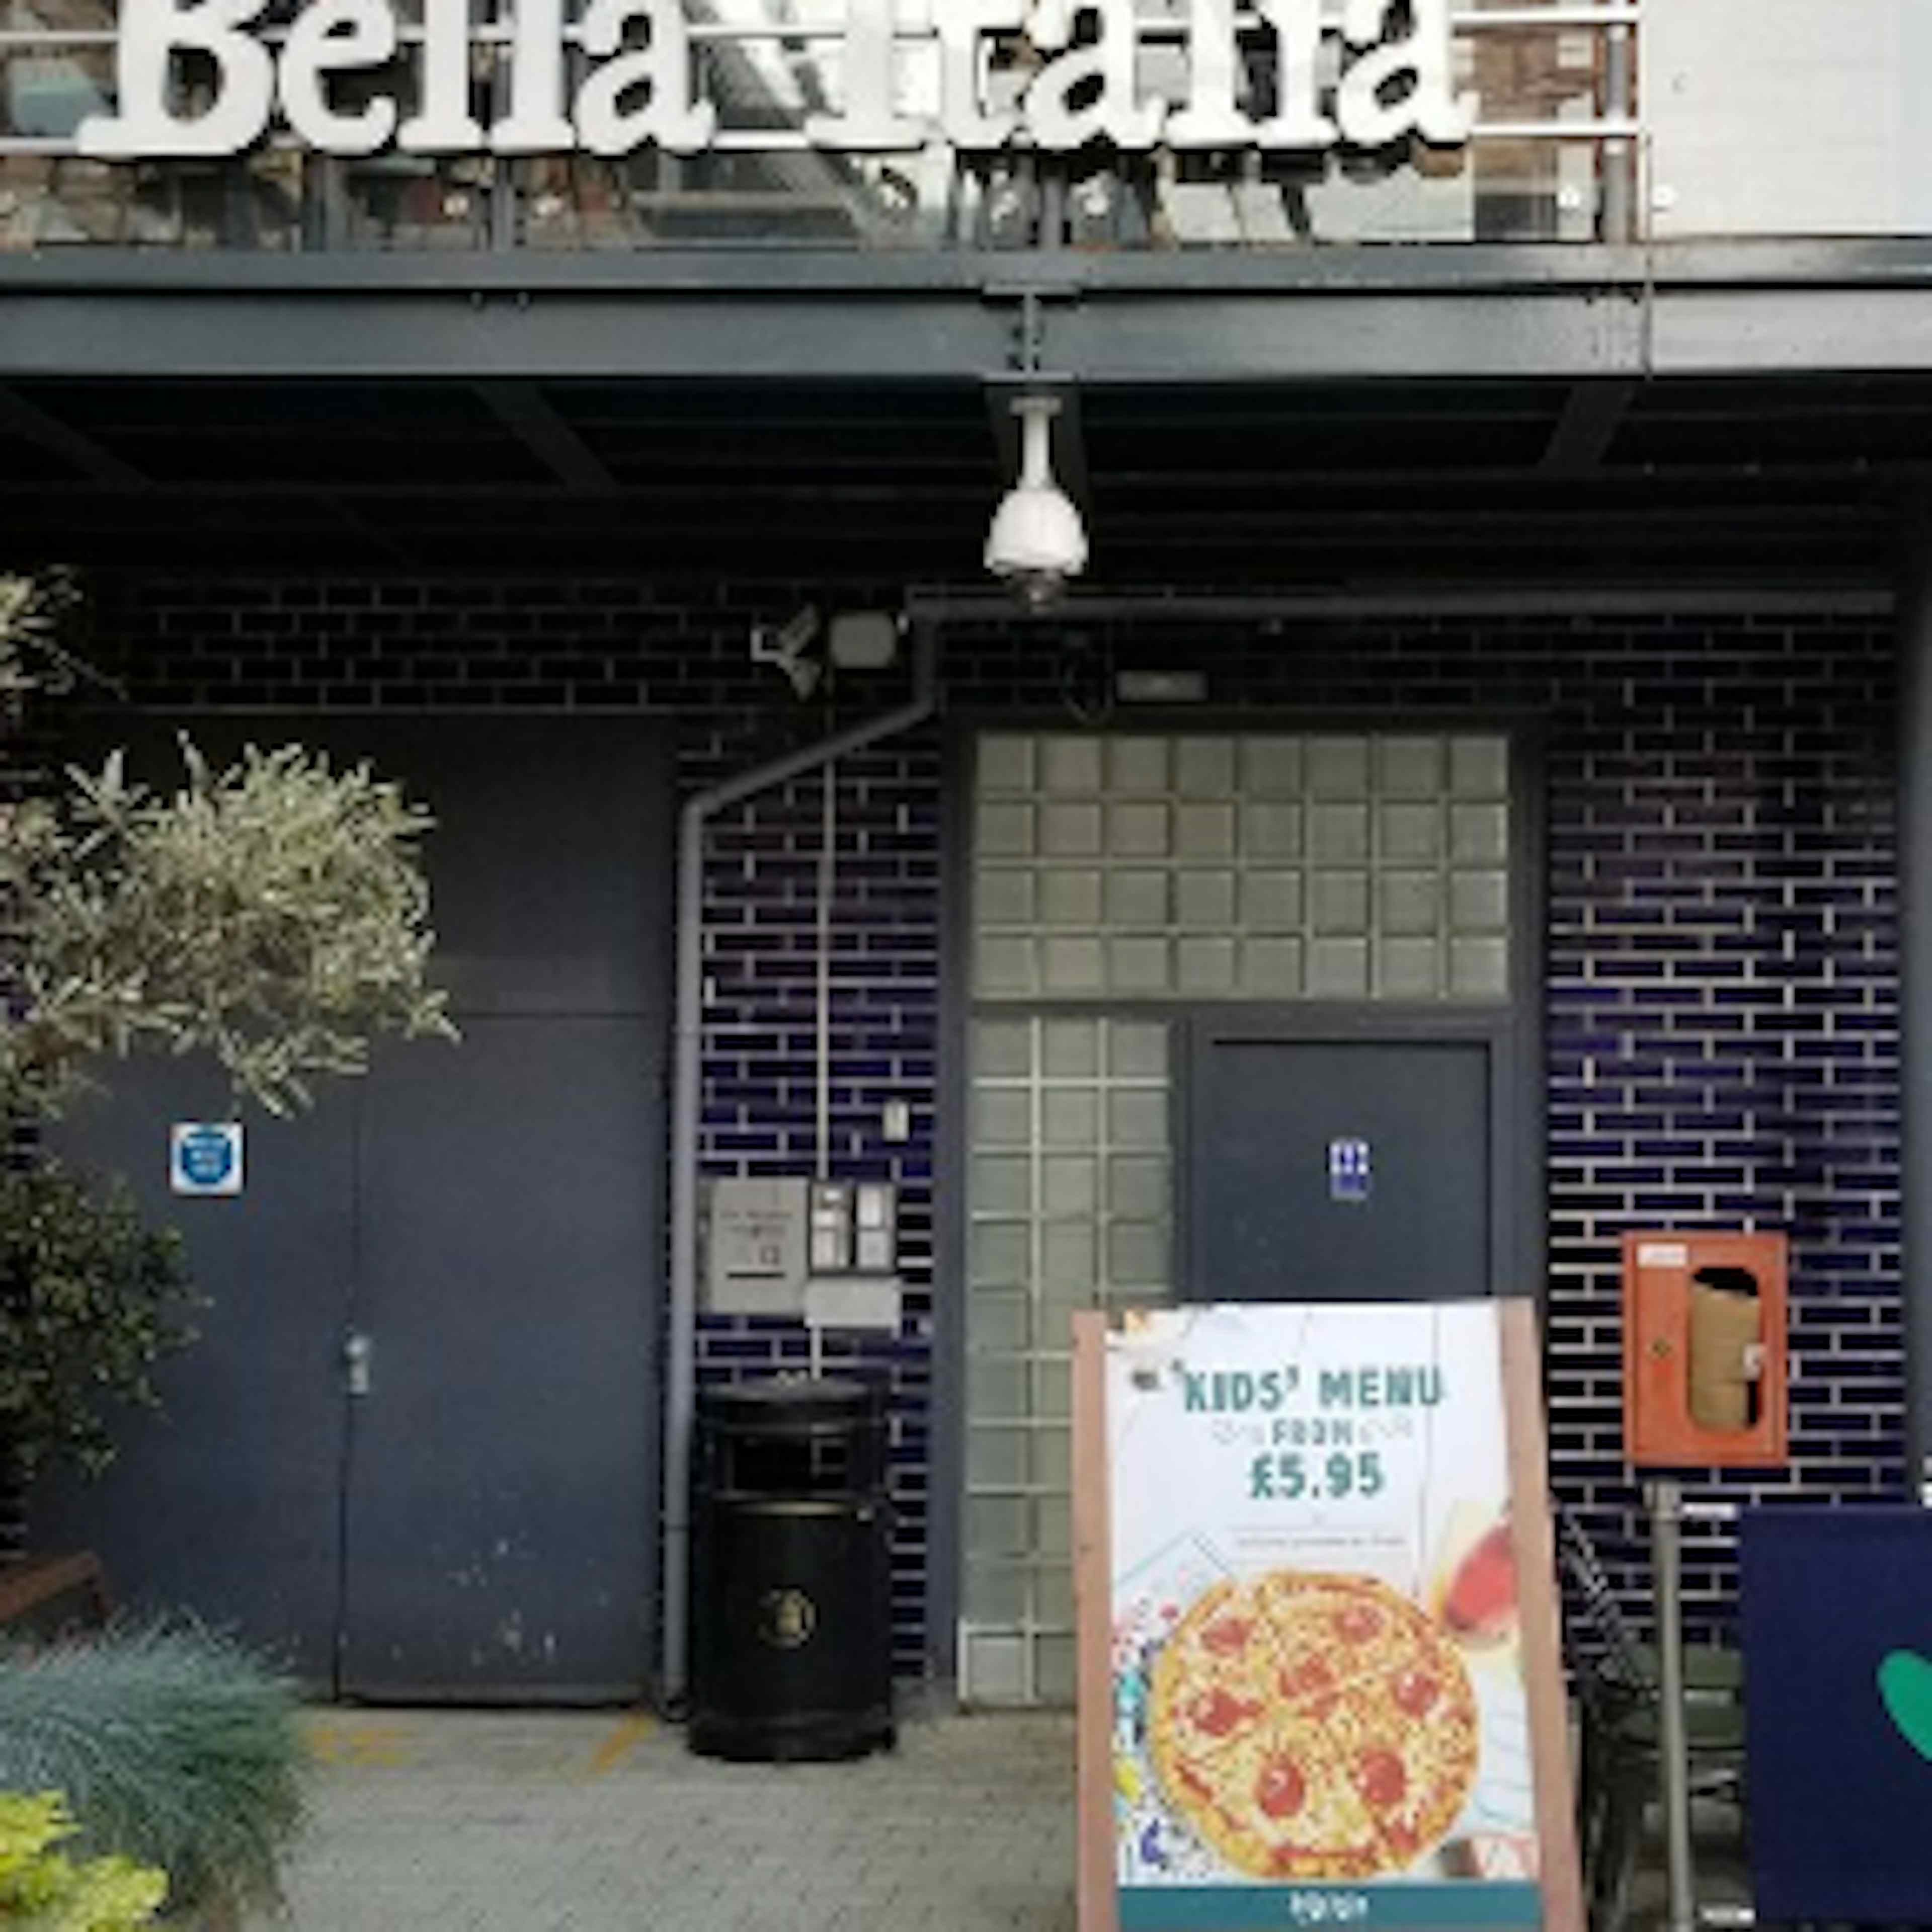 Bella Italia Cardiff Old Brewery Quarter - Whole Venue image 3